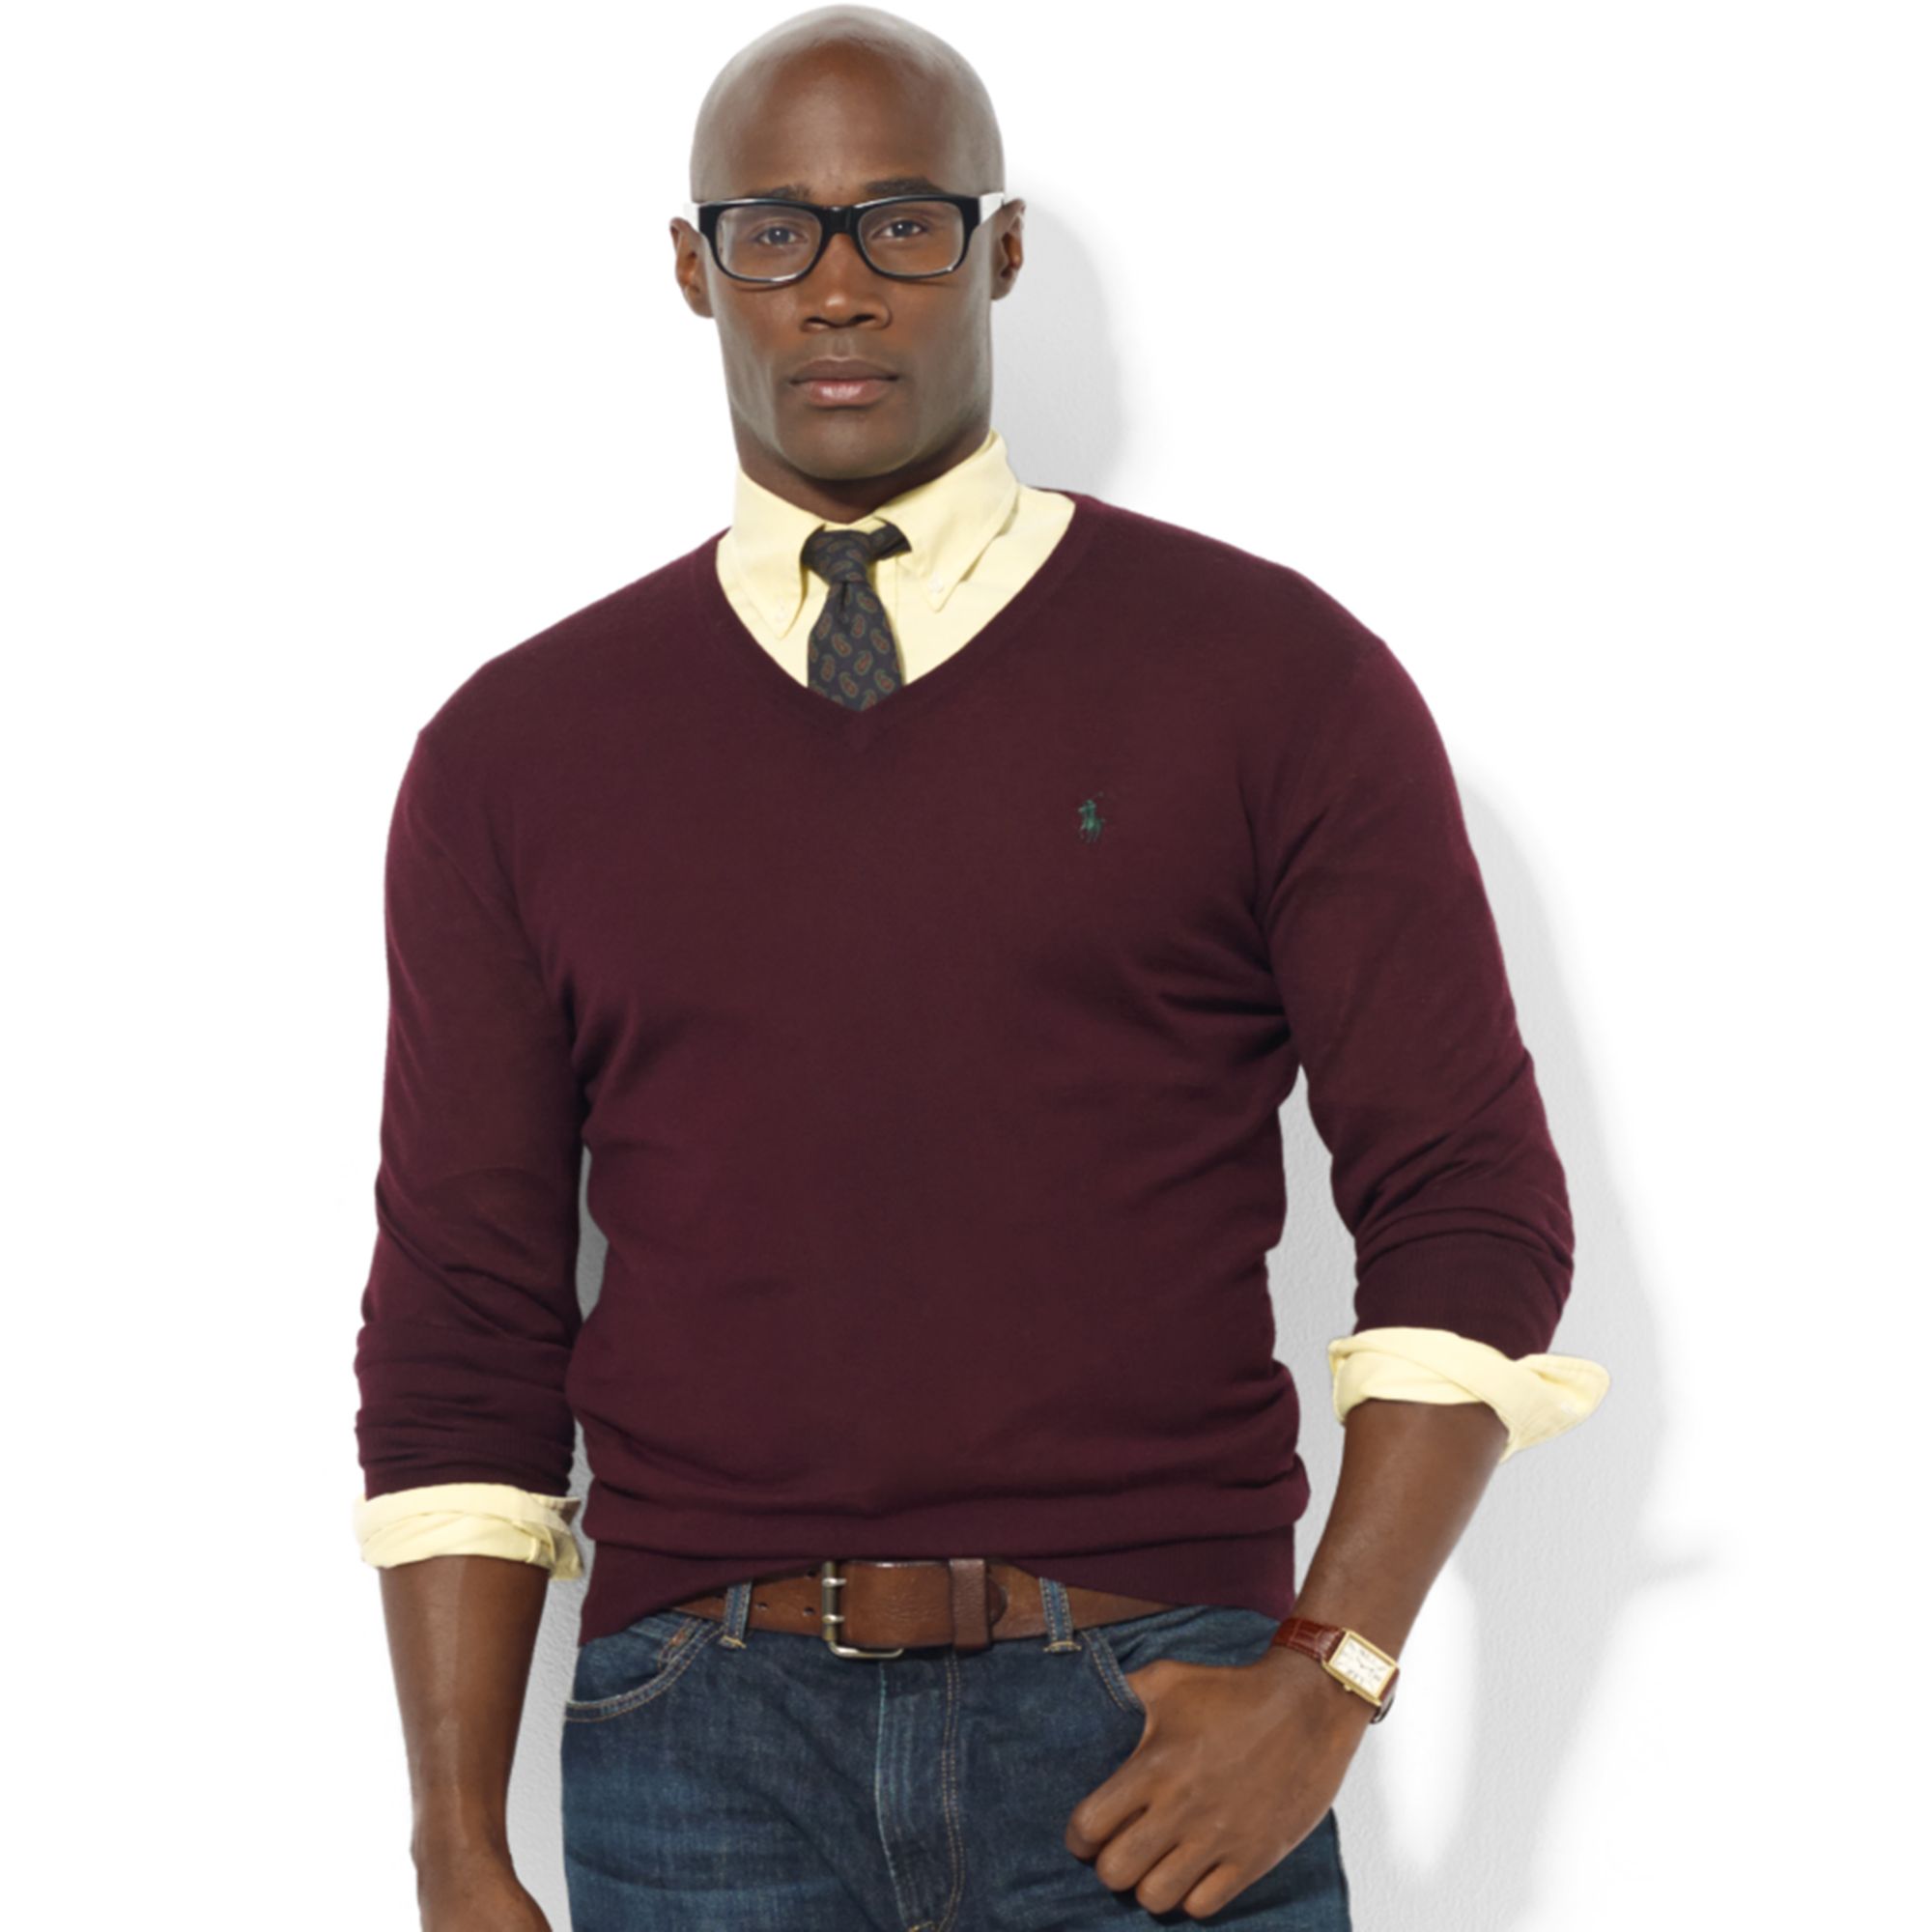 ralph lauren burgundy sweater